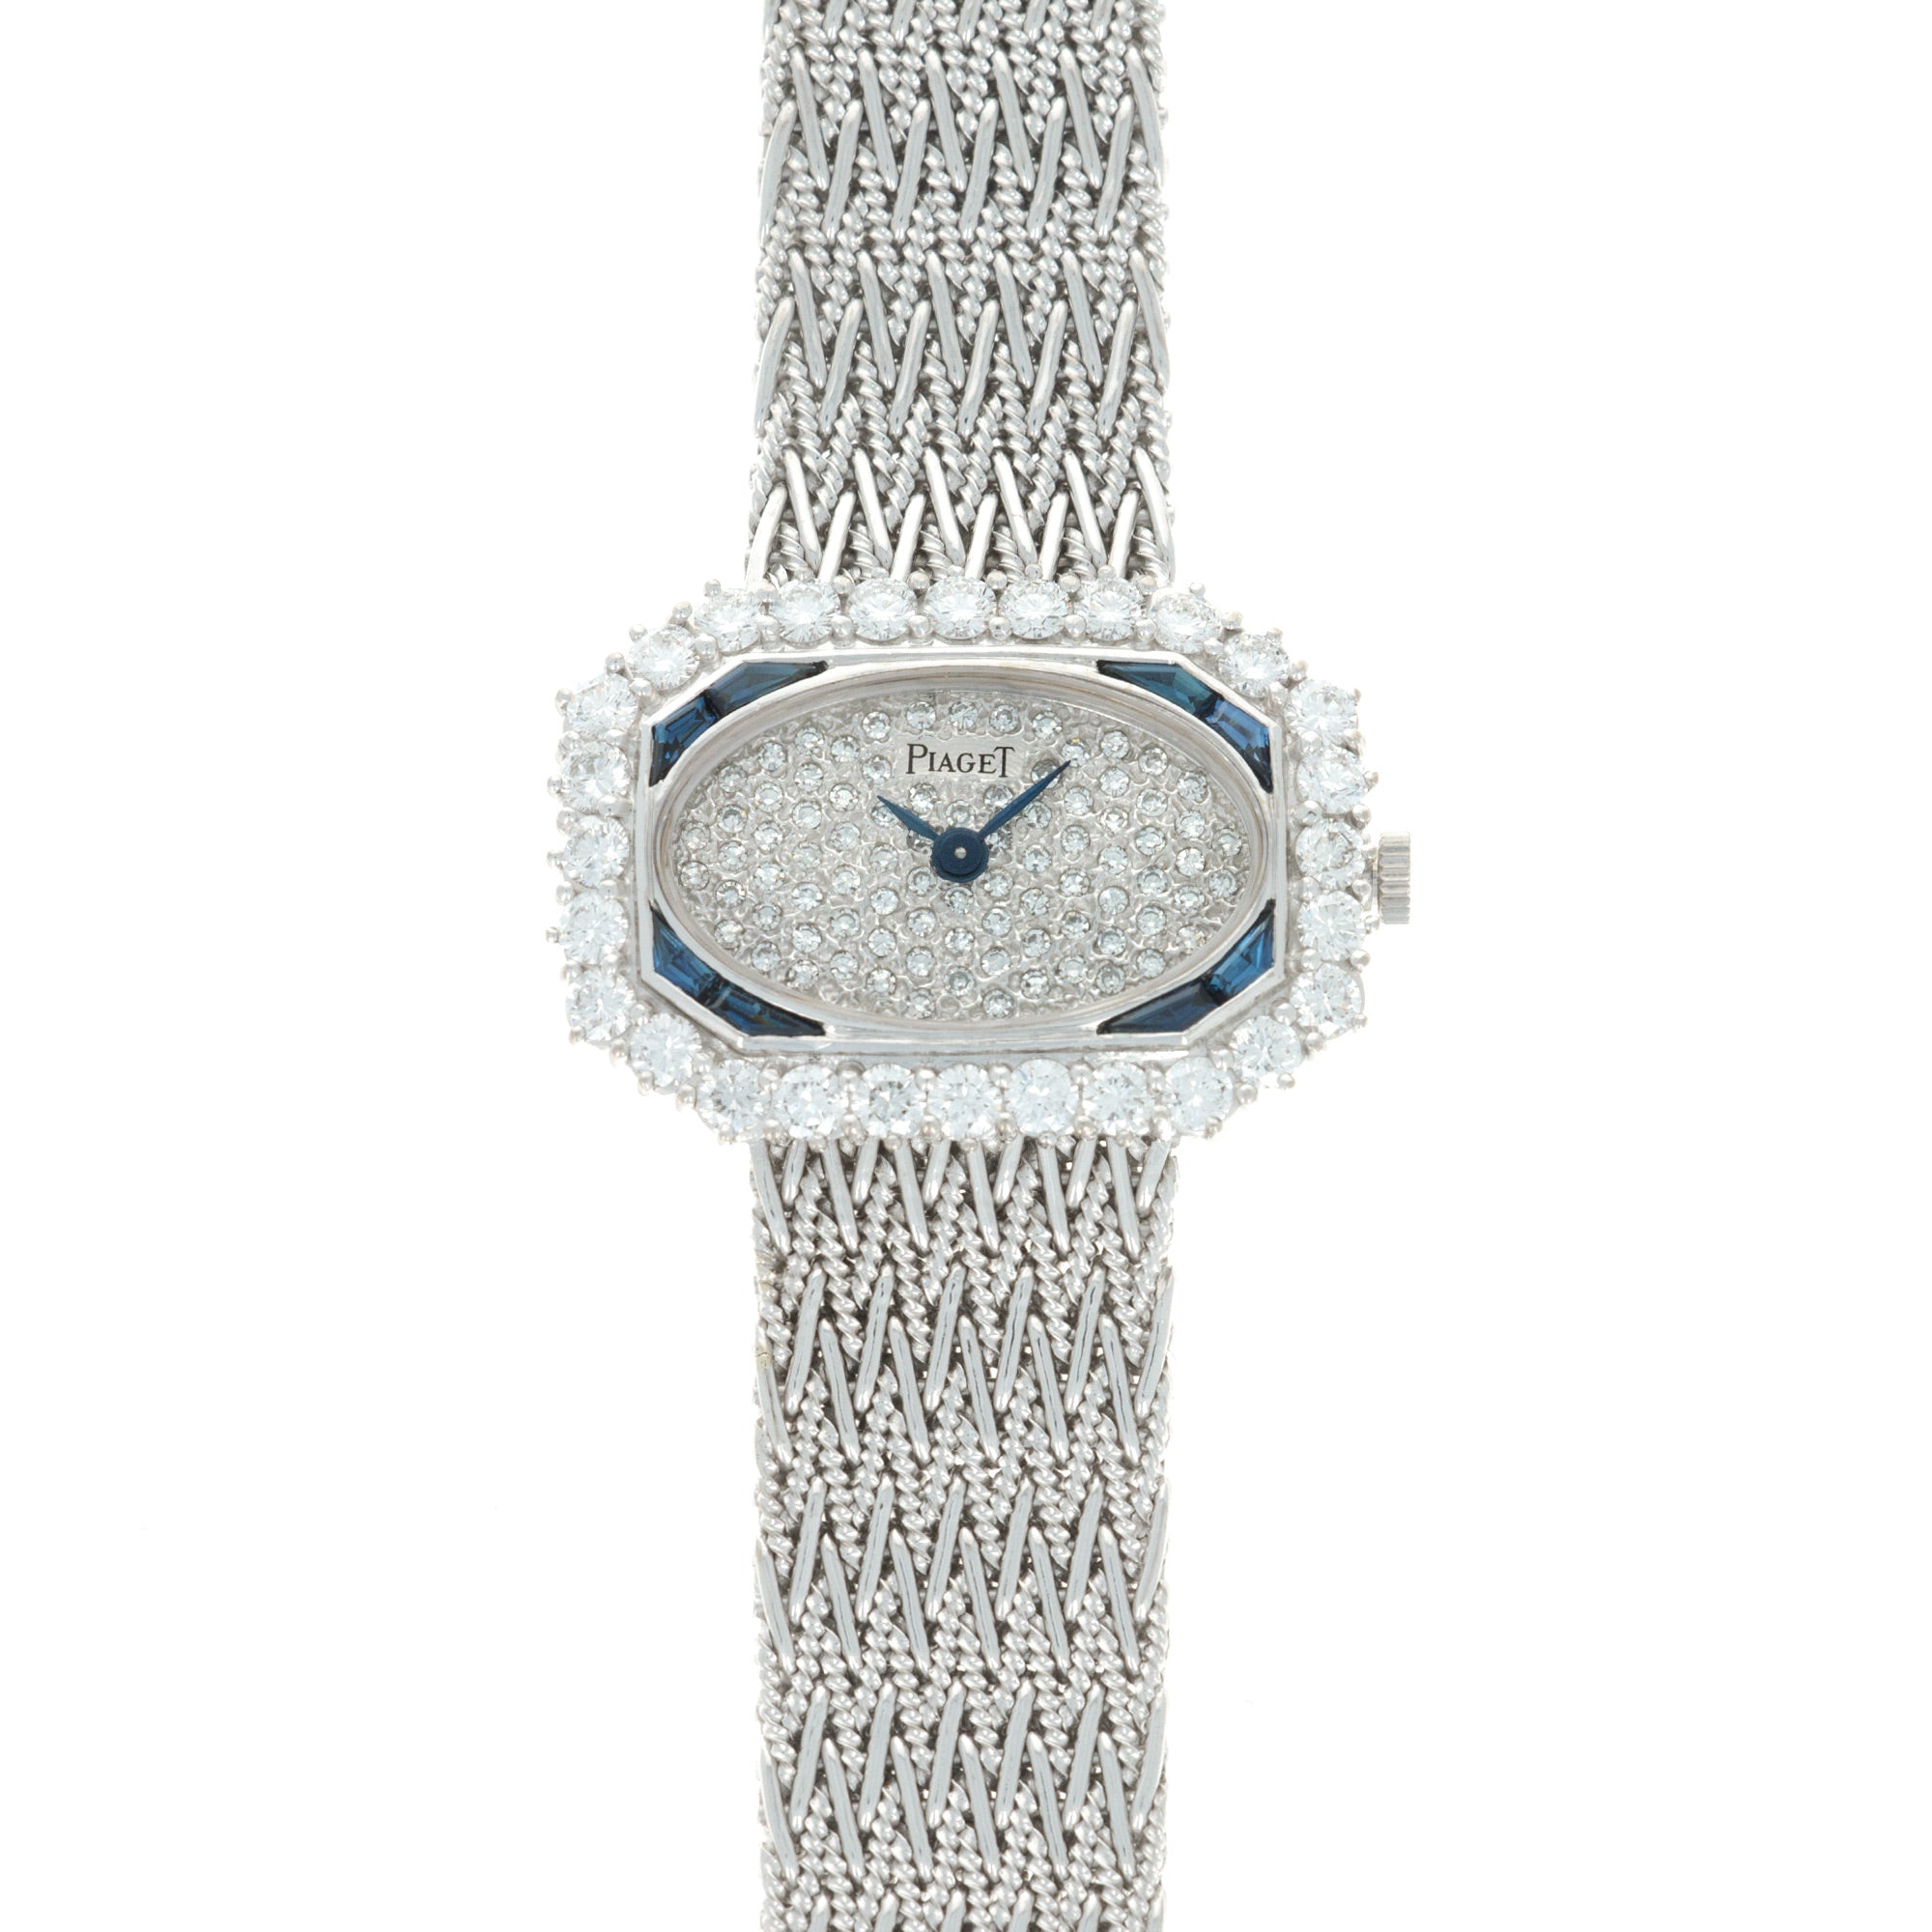 Piaget - Piaget White Gold Diamond Sapphire Watch, 1970s - The Keystone Watches